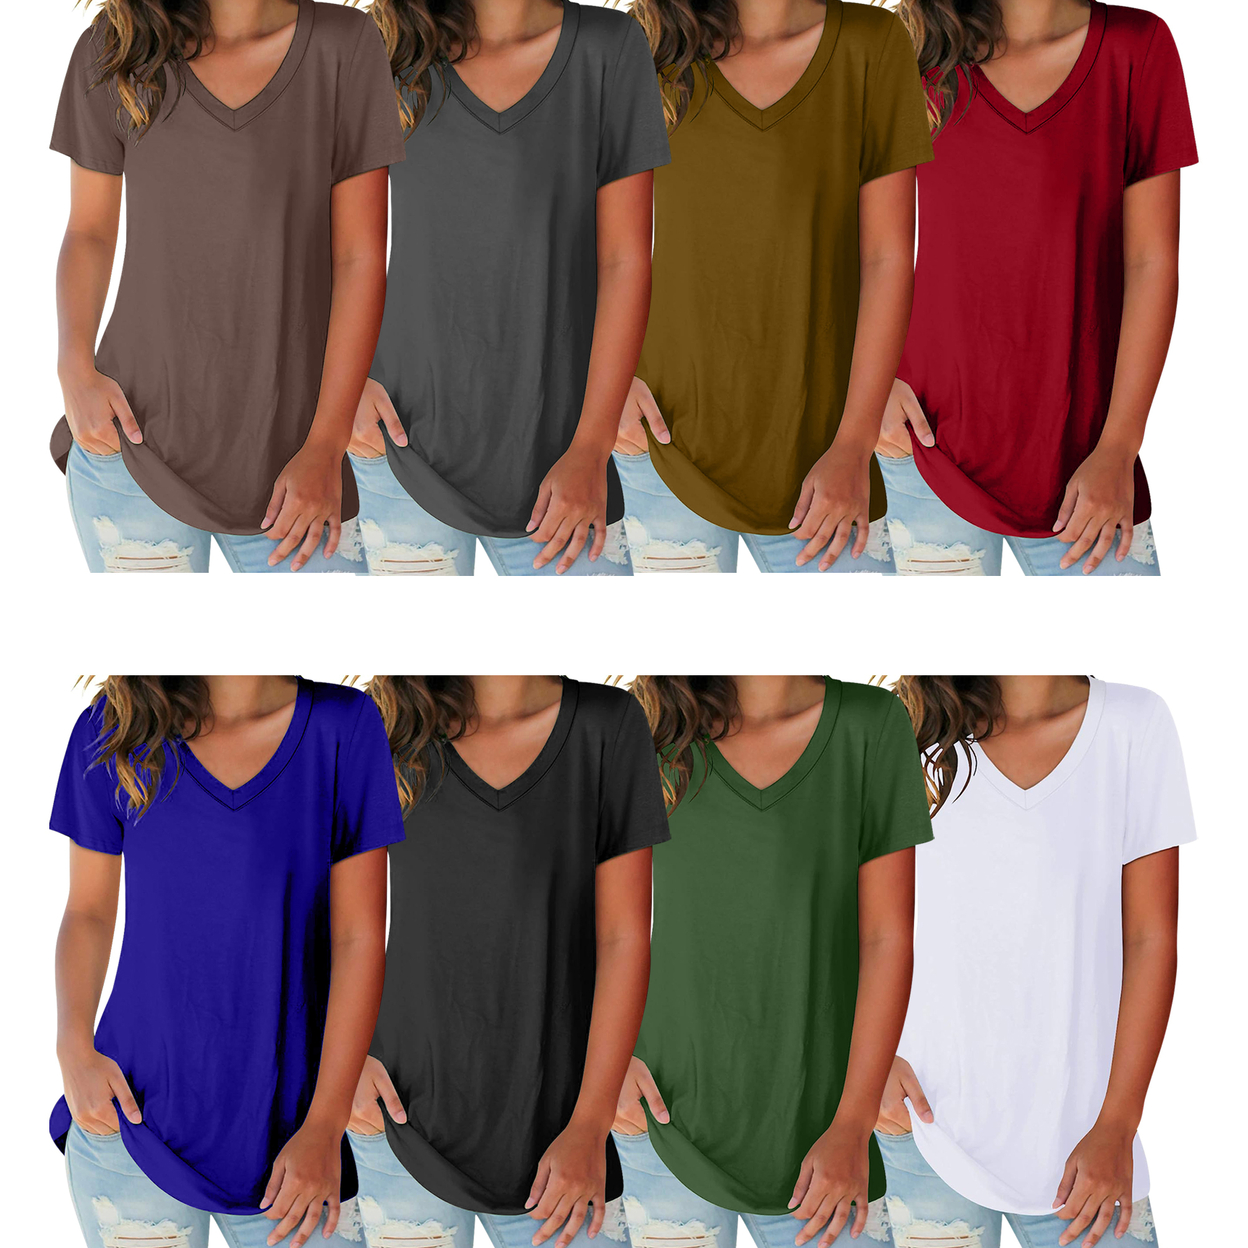 2-Pack: Women's Ultra Soft Smooth Cotton Blend Basic V-Neck Short Sleeve Shirts - Grey & Brown, Xx-large